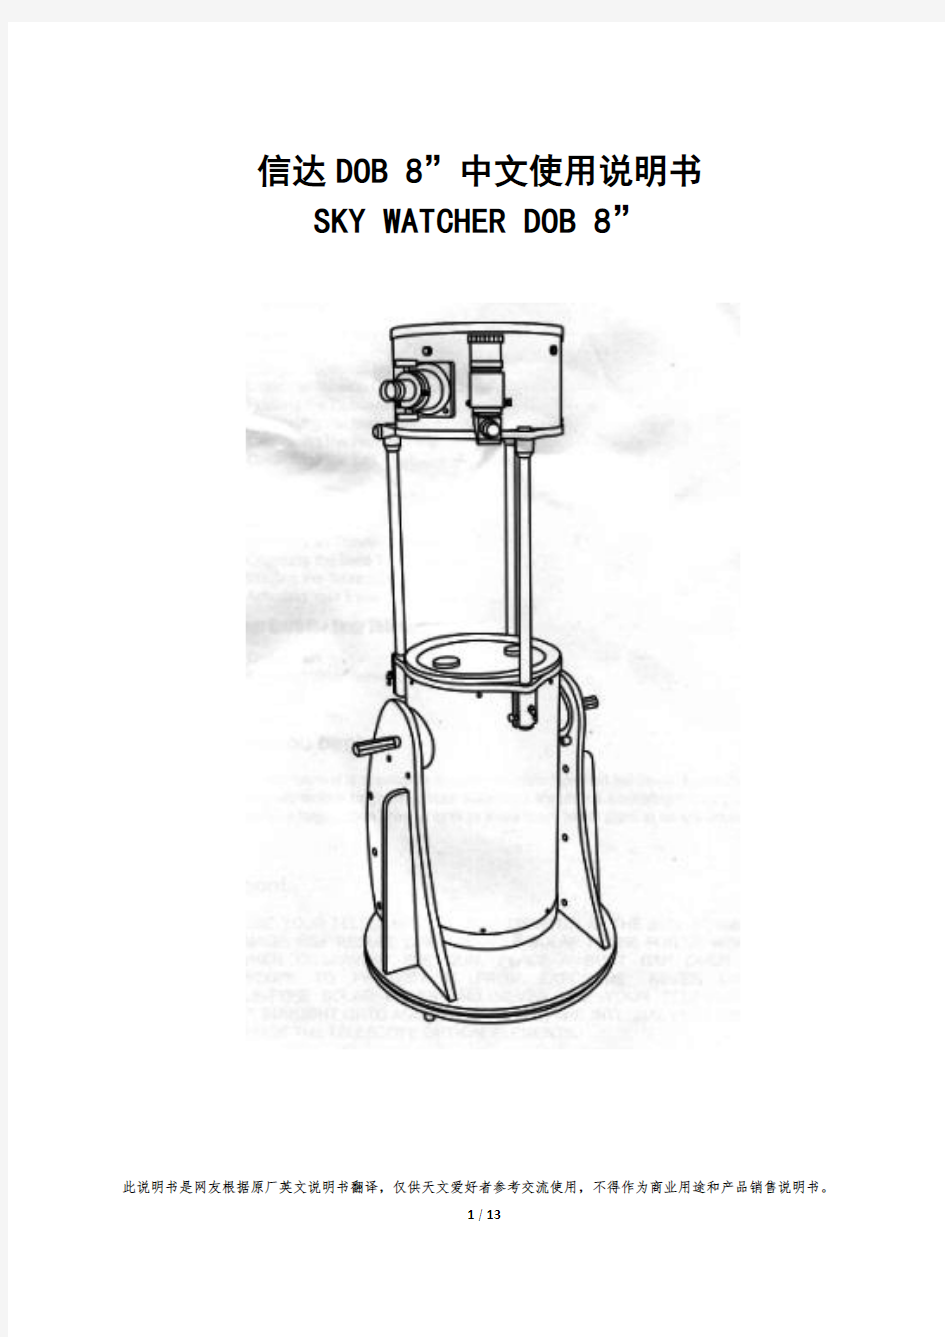 SKYWATCHER信DOB8”天文望远镜中文使用说明书